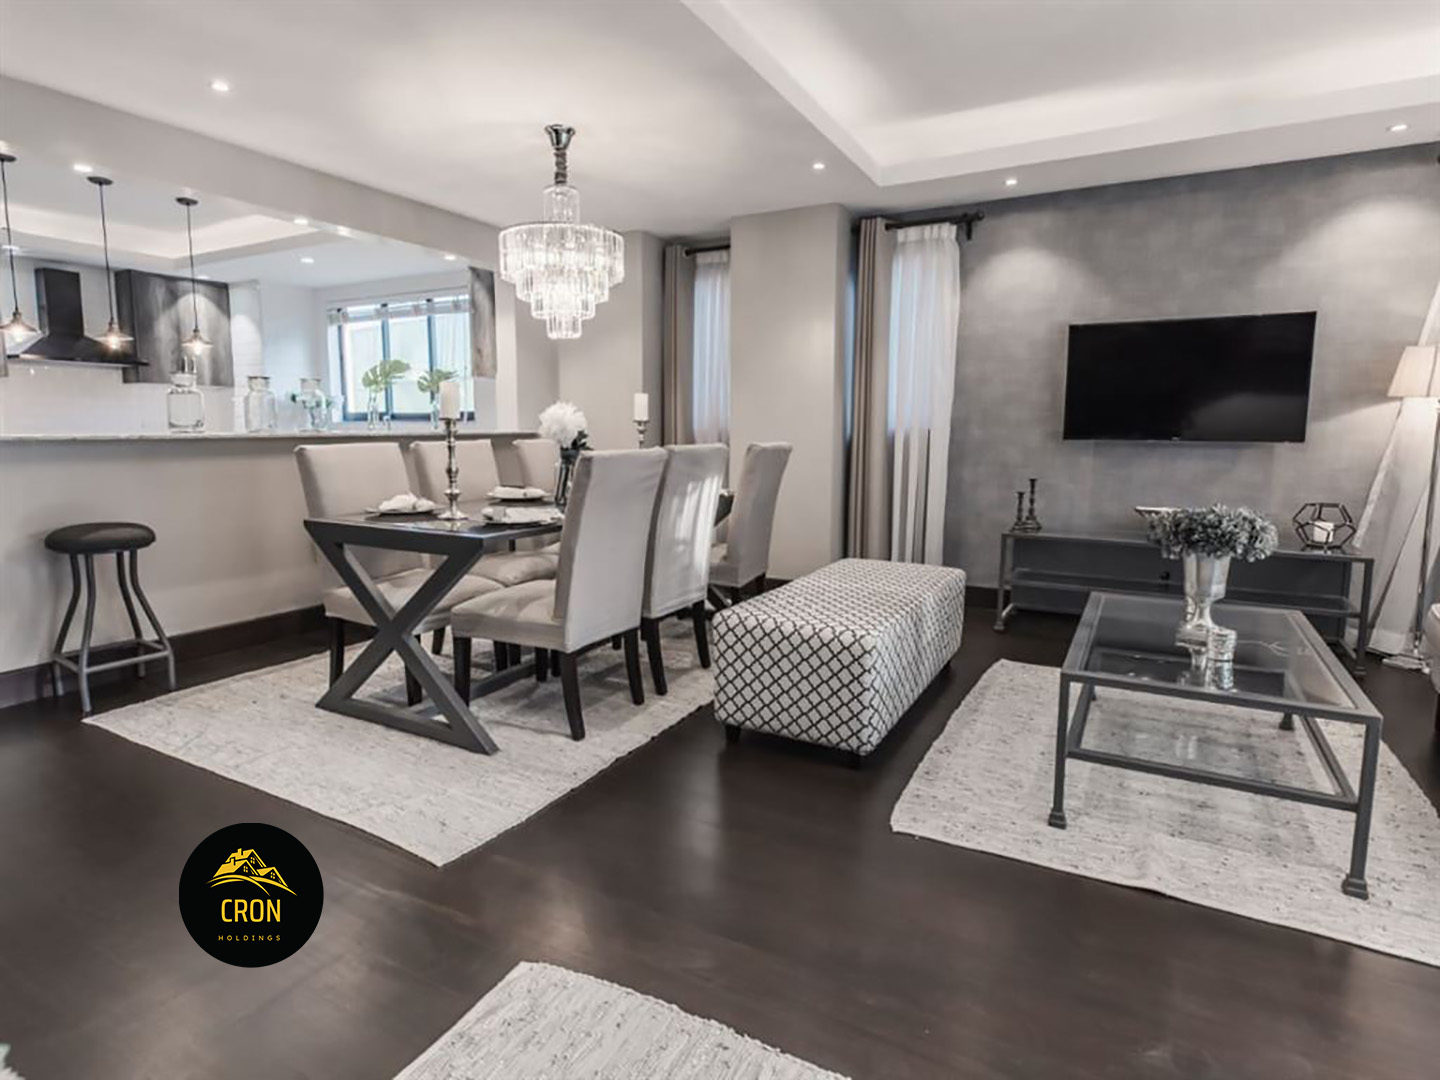 4 Bedroom Duplex Apartments for Sale In Lavington, Nairobi | Cron Holdings